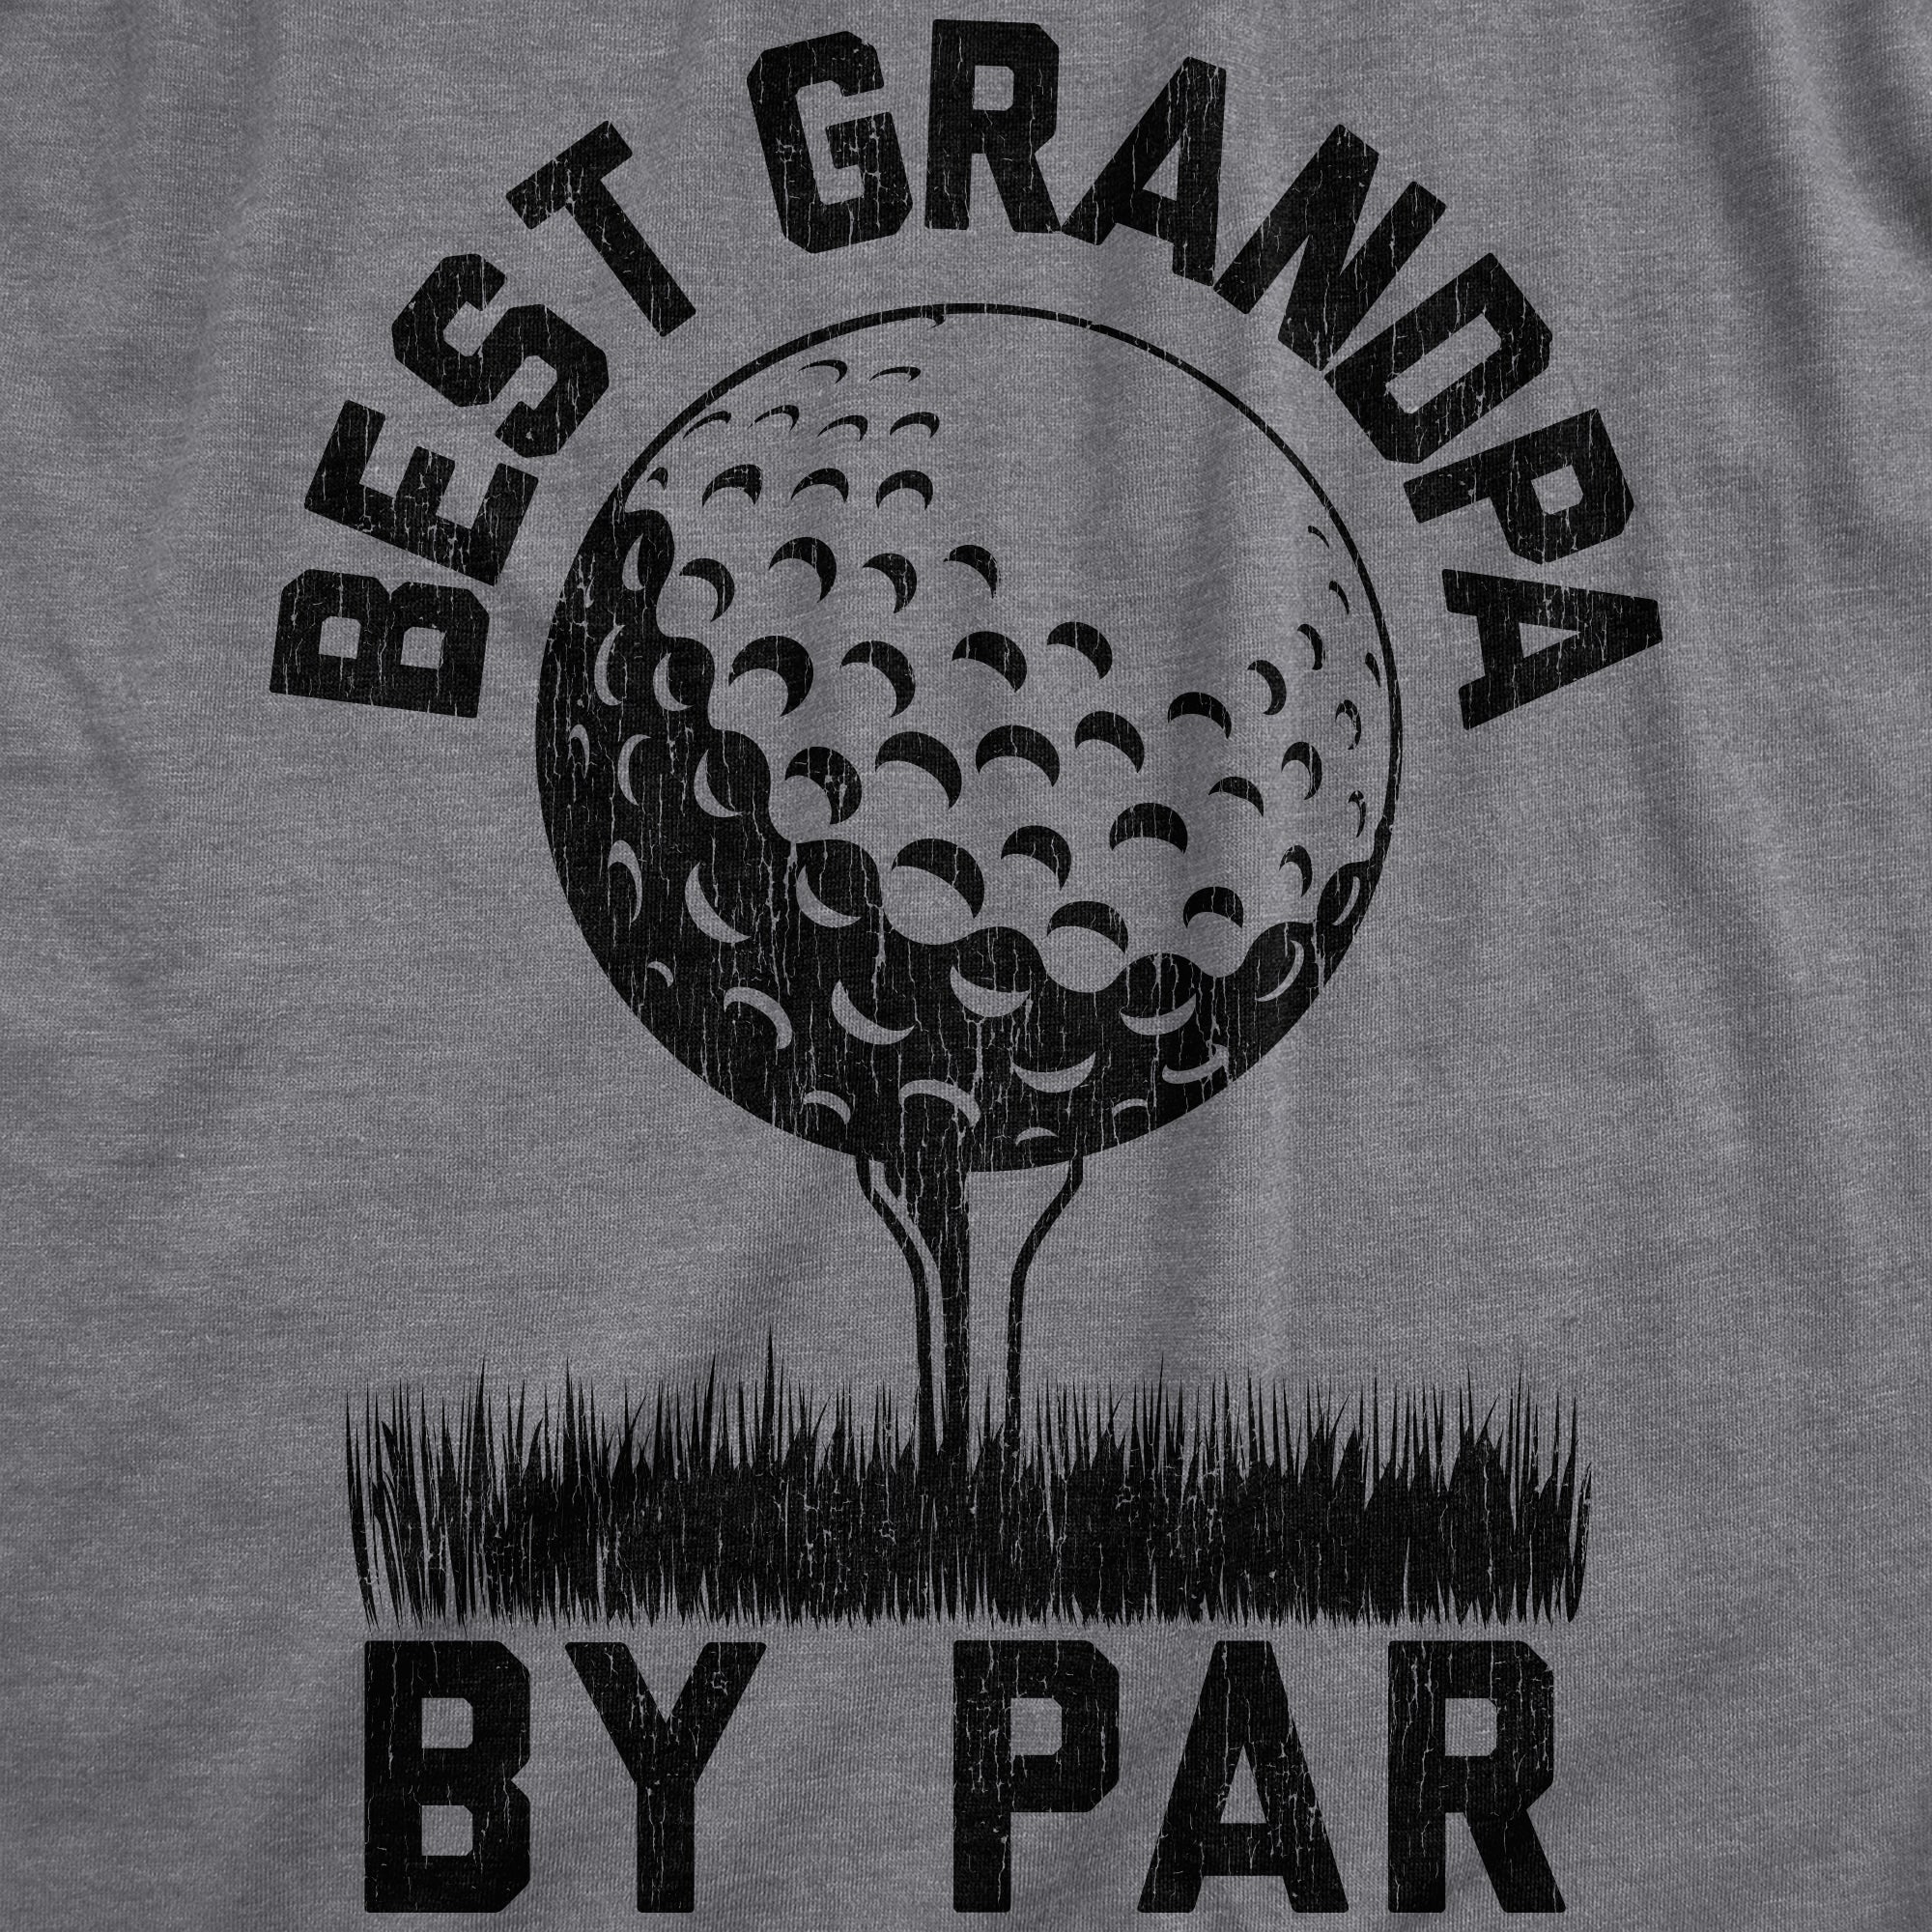 Funny Dark Heather Grey - Grandpa by Par Best Grandpa By Par Mens T Shirt Nerdy Father's Day Golf Grandfather Tee